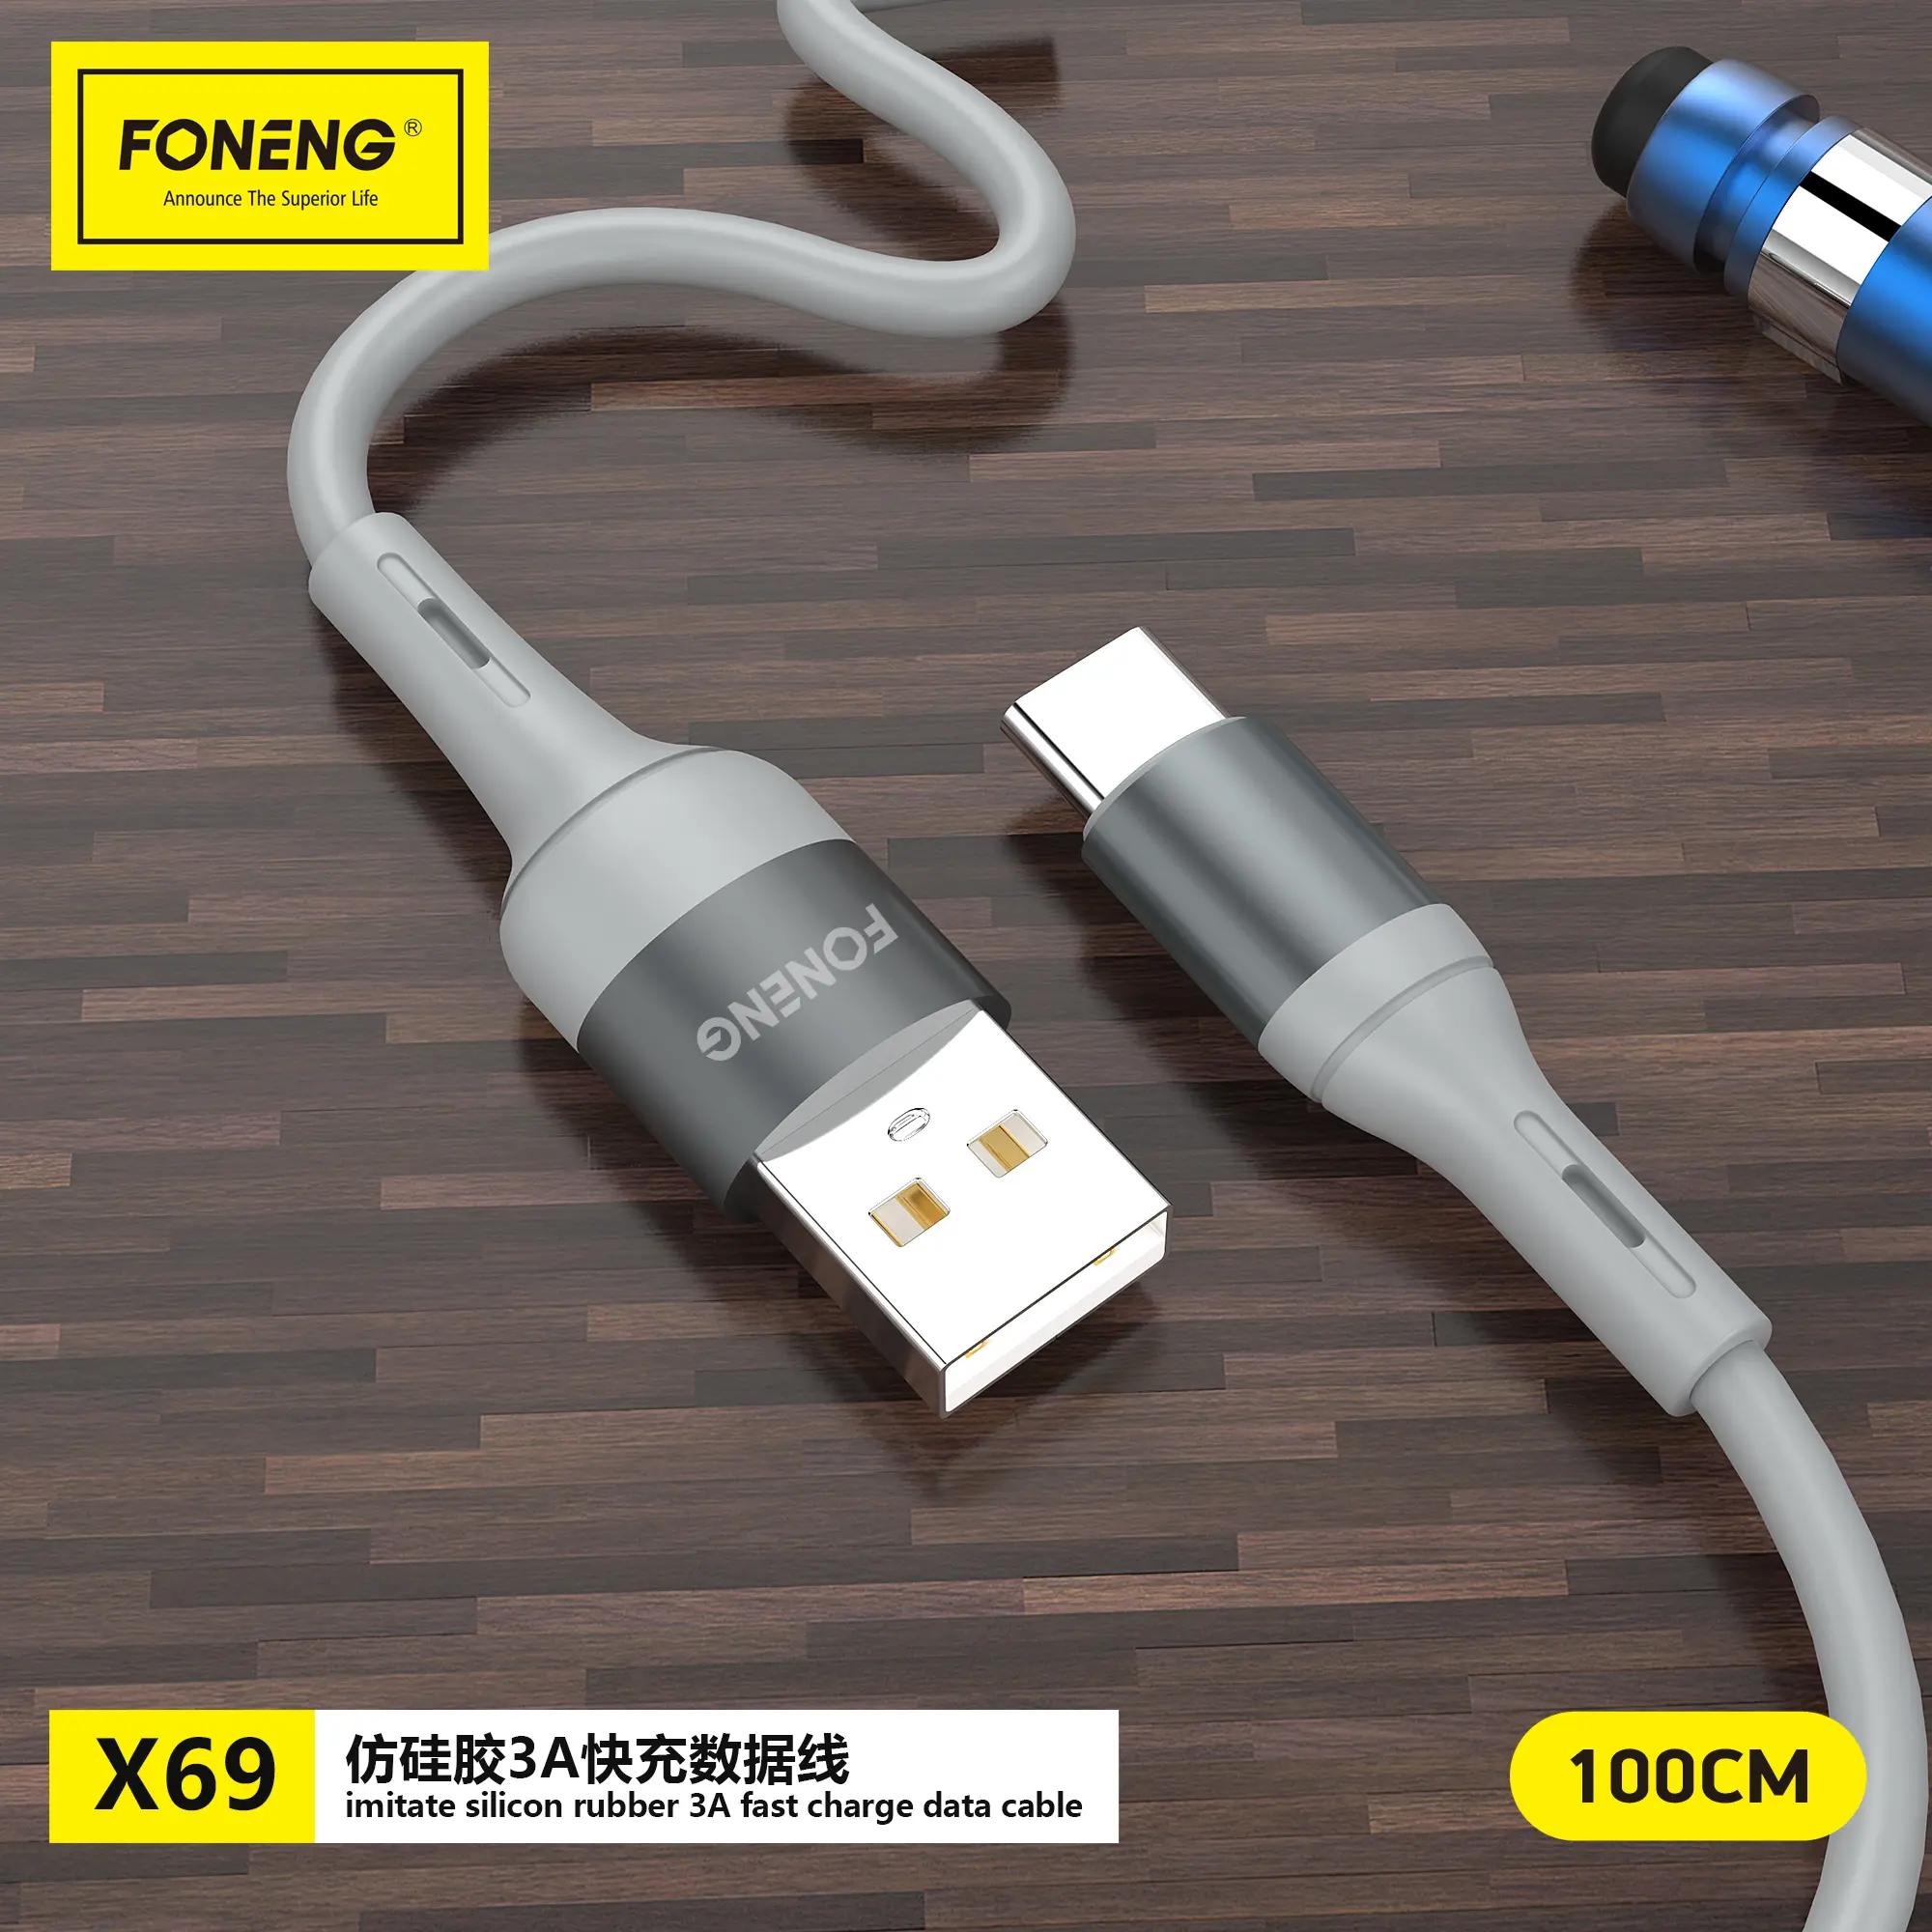 FONENG sıcak satış X69 taklit silikon metal 3A sıvı antifriz veri kablosu